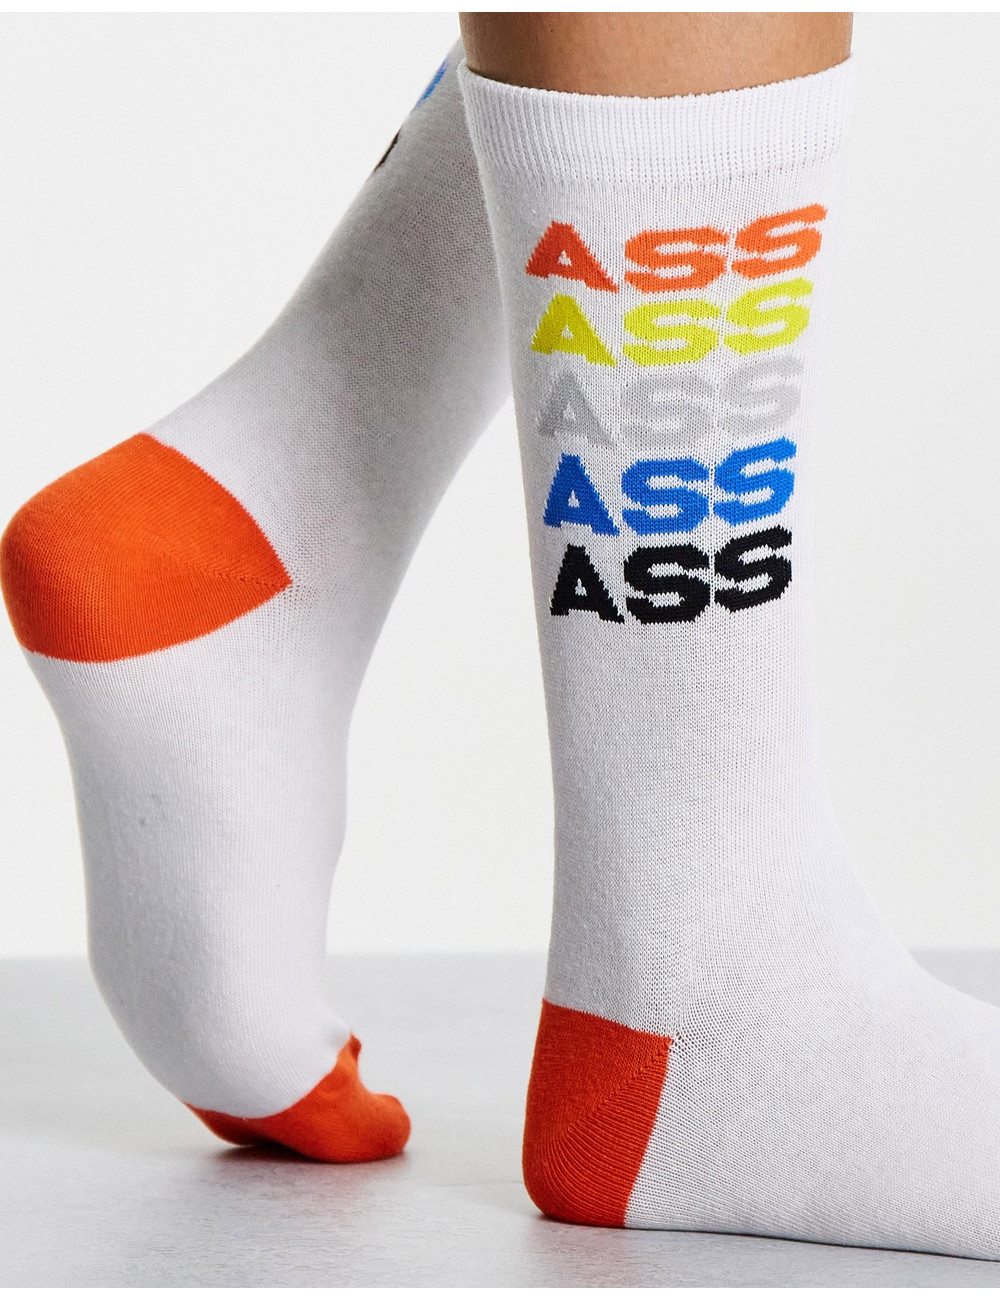 Typo socks with rainbow...